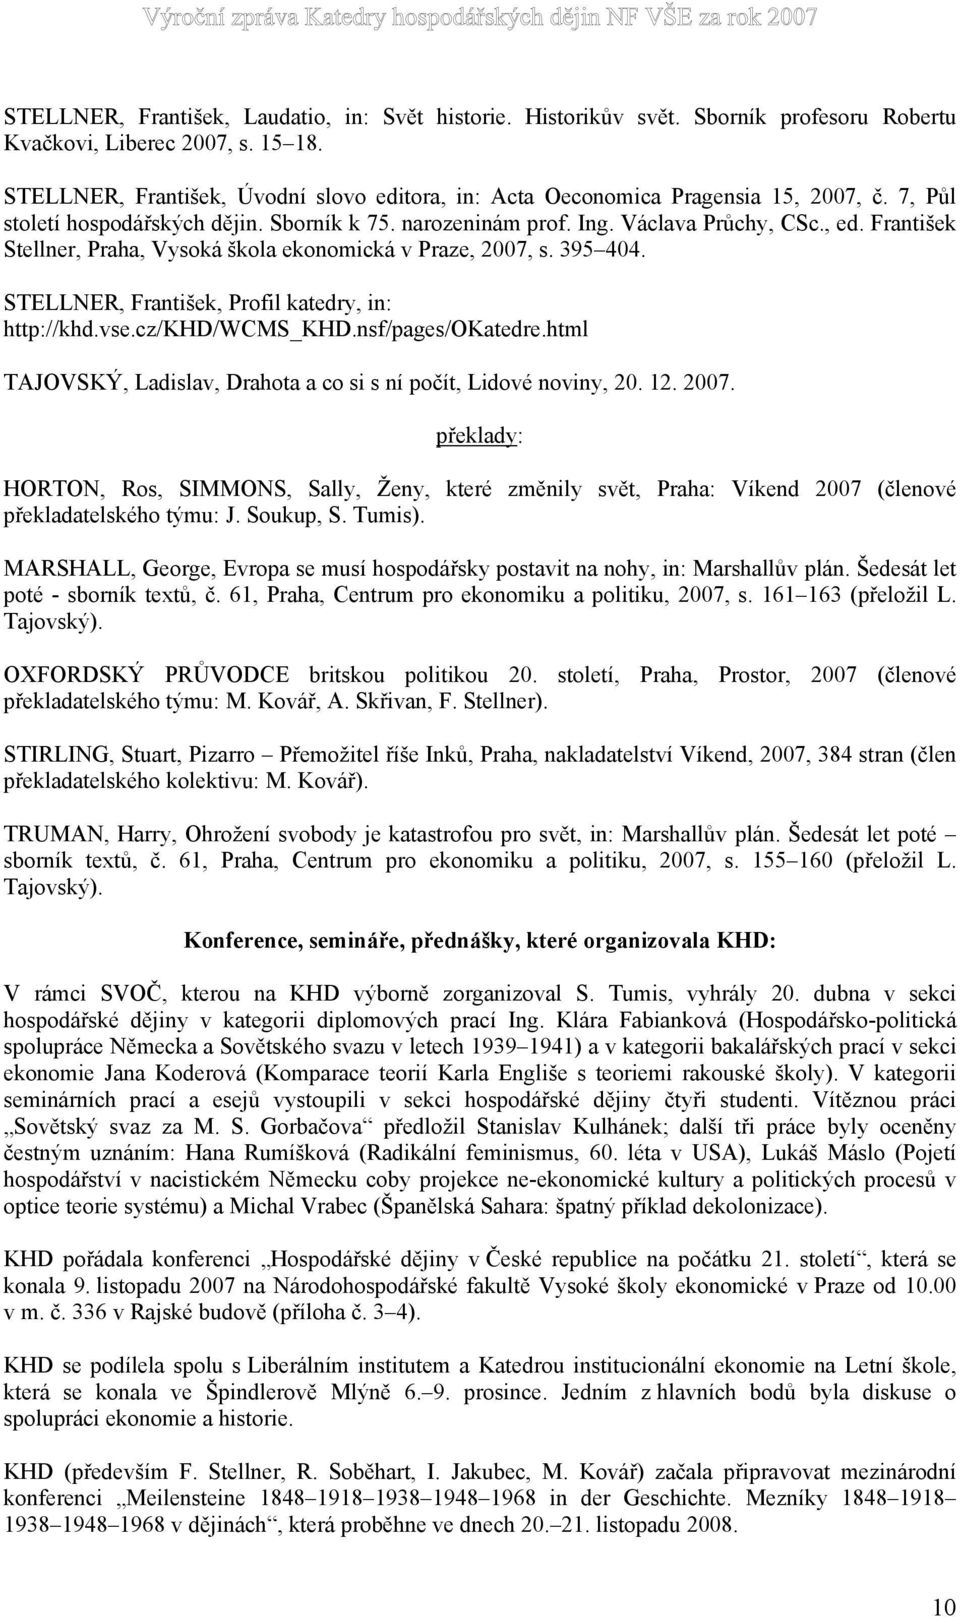 František Stellner, Praha, Vysoká škola ekonomická v Praze, 2007, s. 395 404. STELLNER, František, Profil katedry, in: http://khd.vse.cz/khd/wcms_khd.nsf/pages/okatedre.